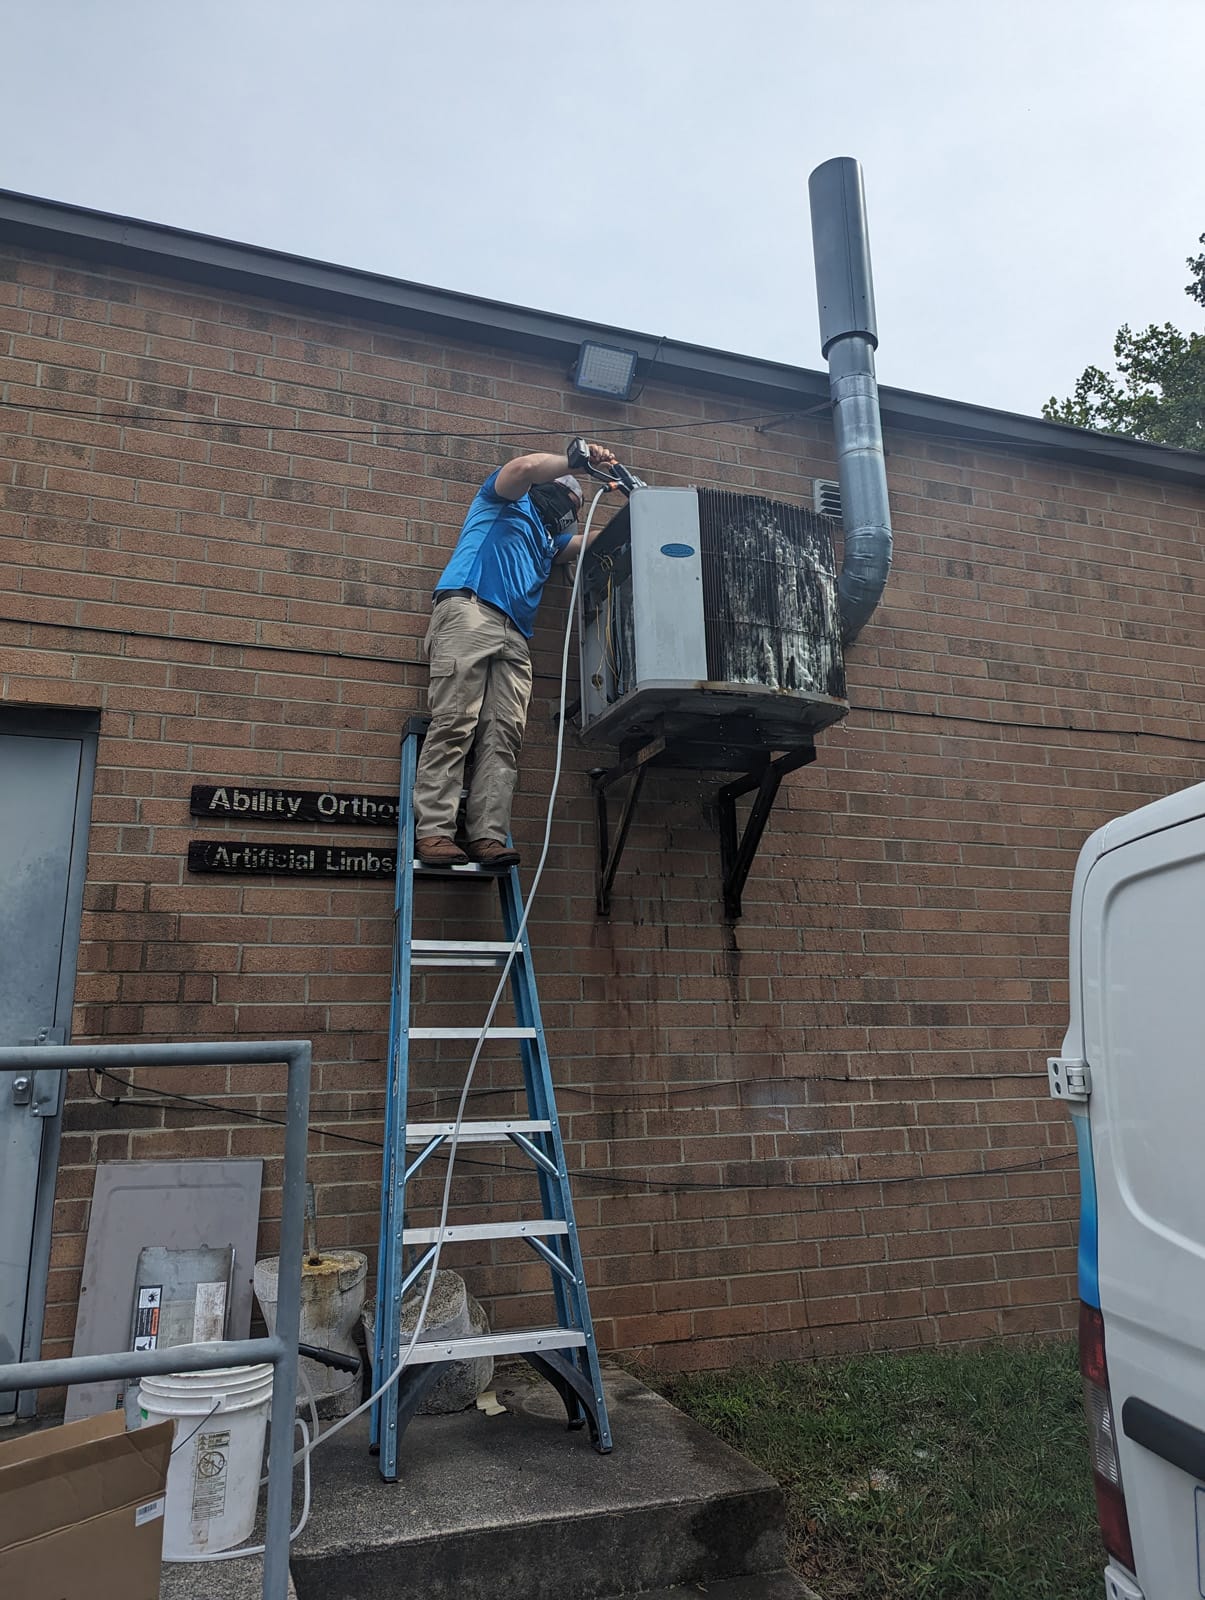 A technician on a ladder working on an outdoor hvac unit beside a brick building.